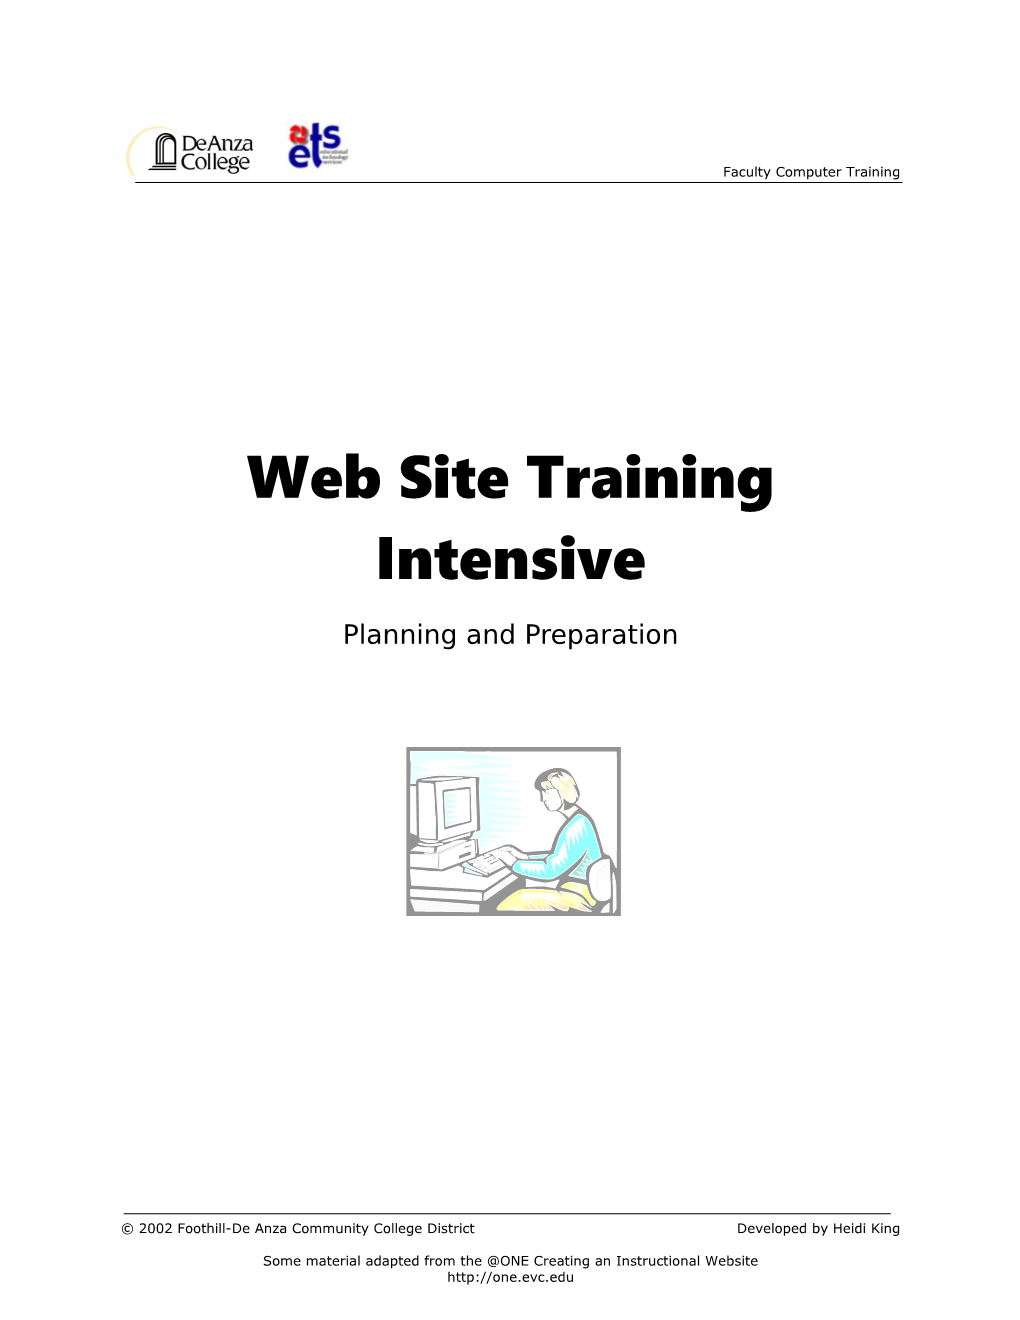 Web Site Training Intensive